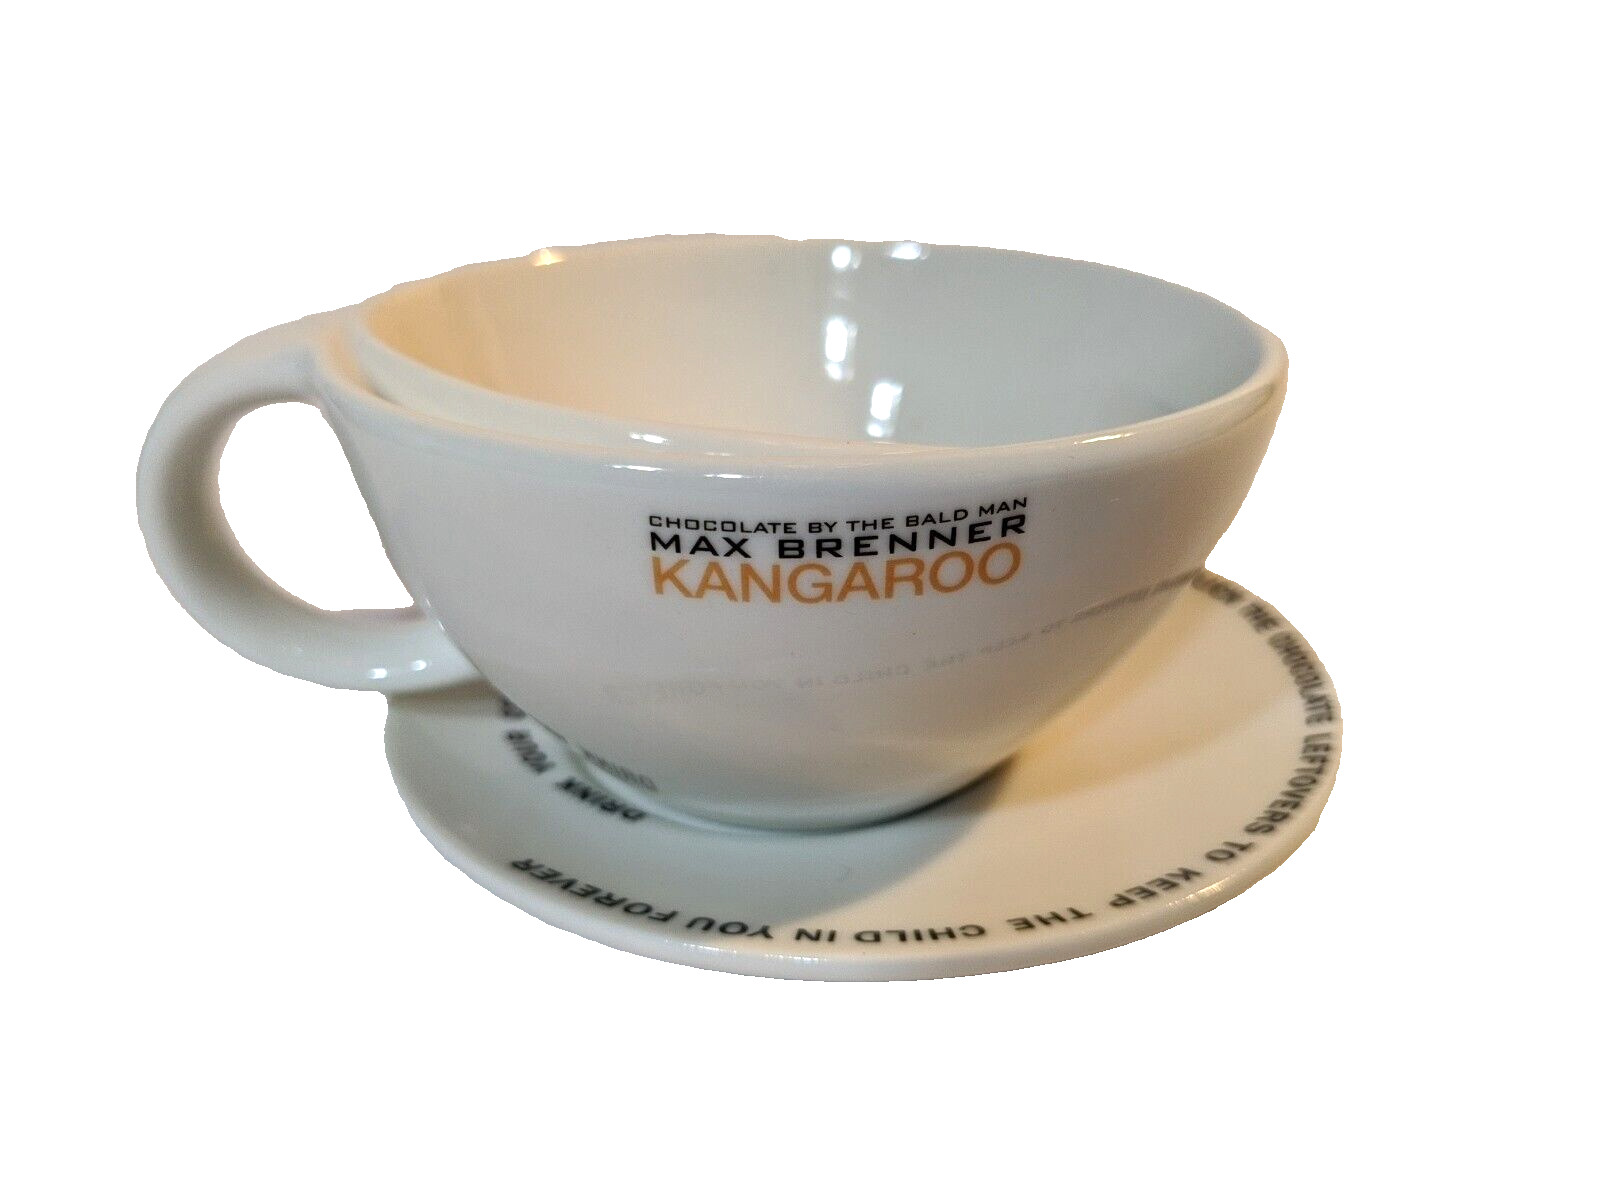 Max Brenner Kangaroo Iris Zohar Hot Chocolate Coffee Tea Cup and Saucer Ceramic